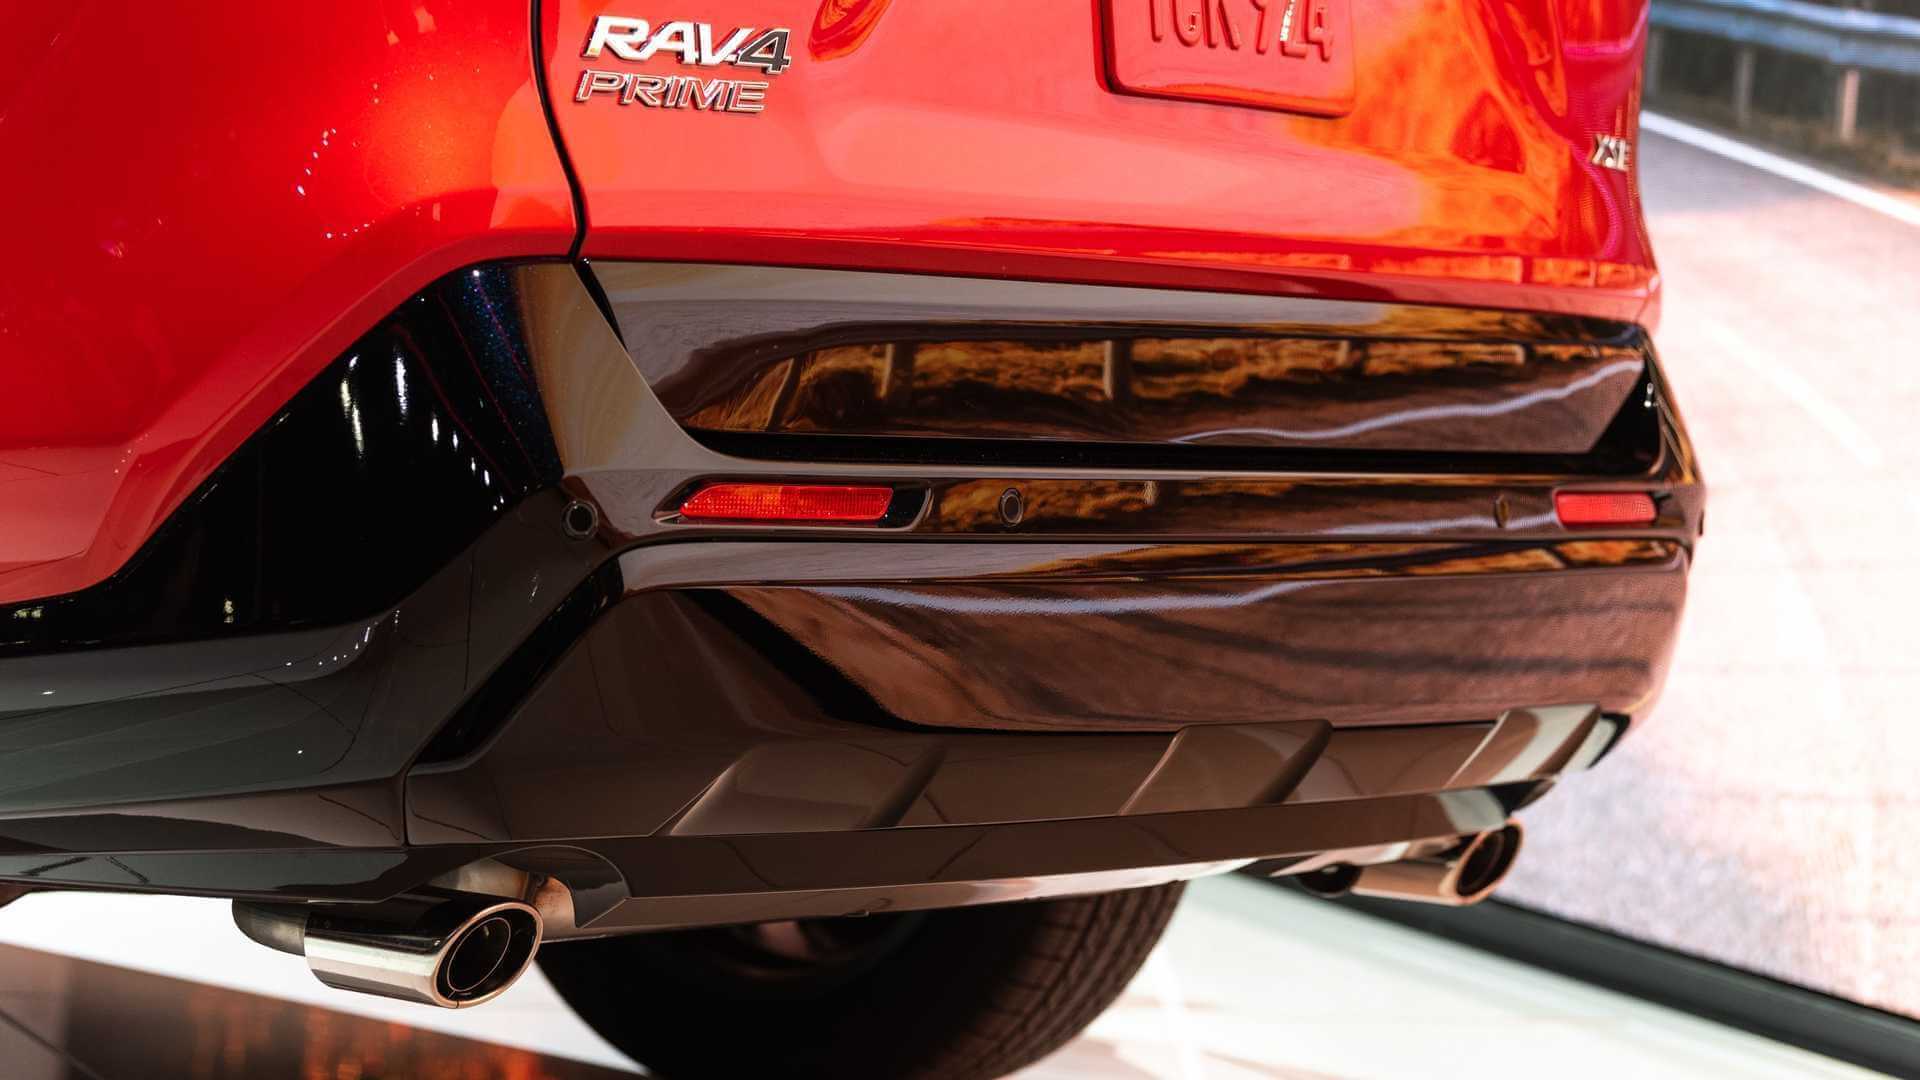 Toyota RAV4 Prime 2021